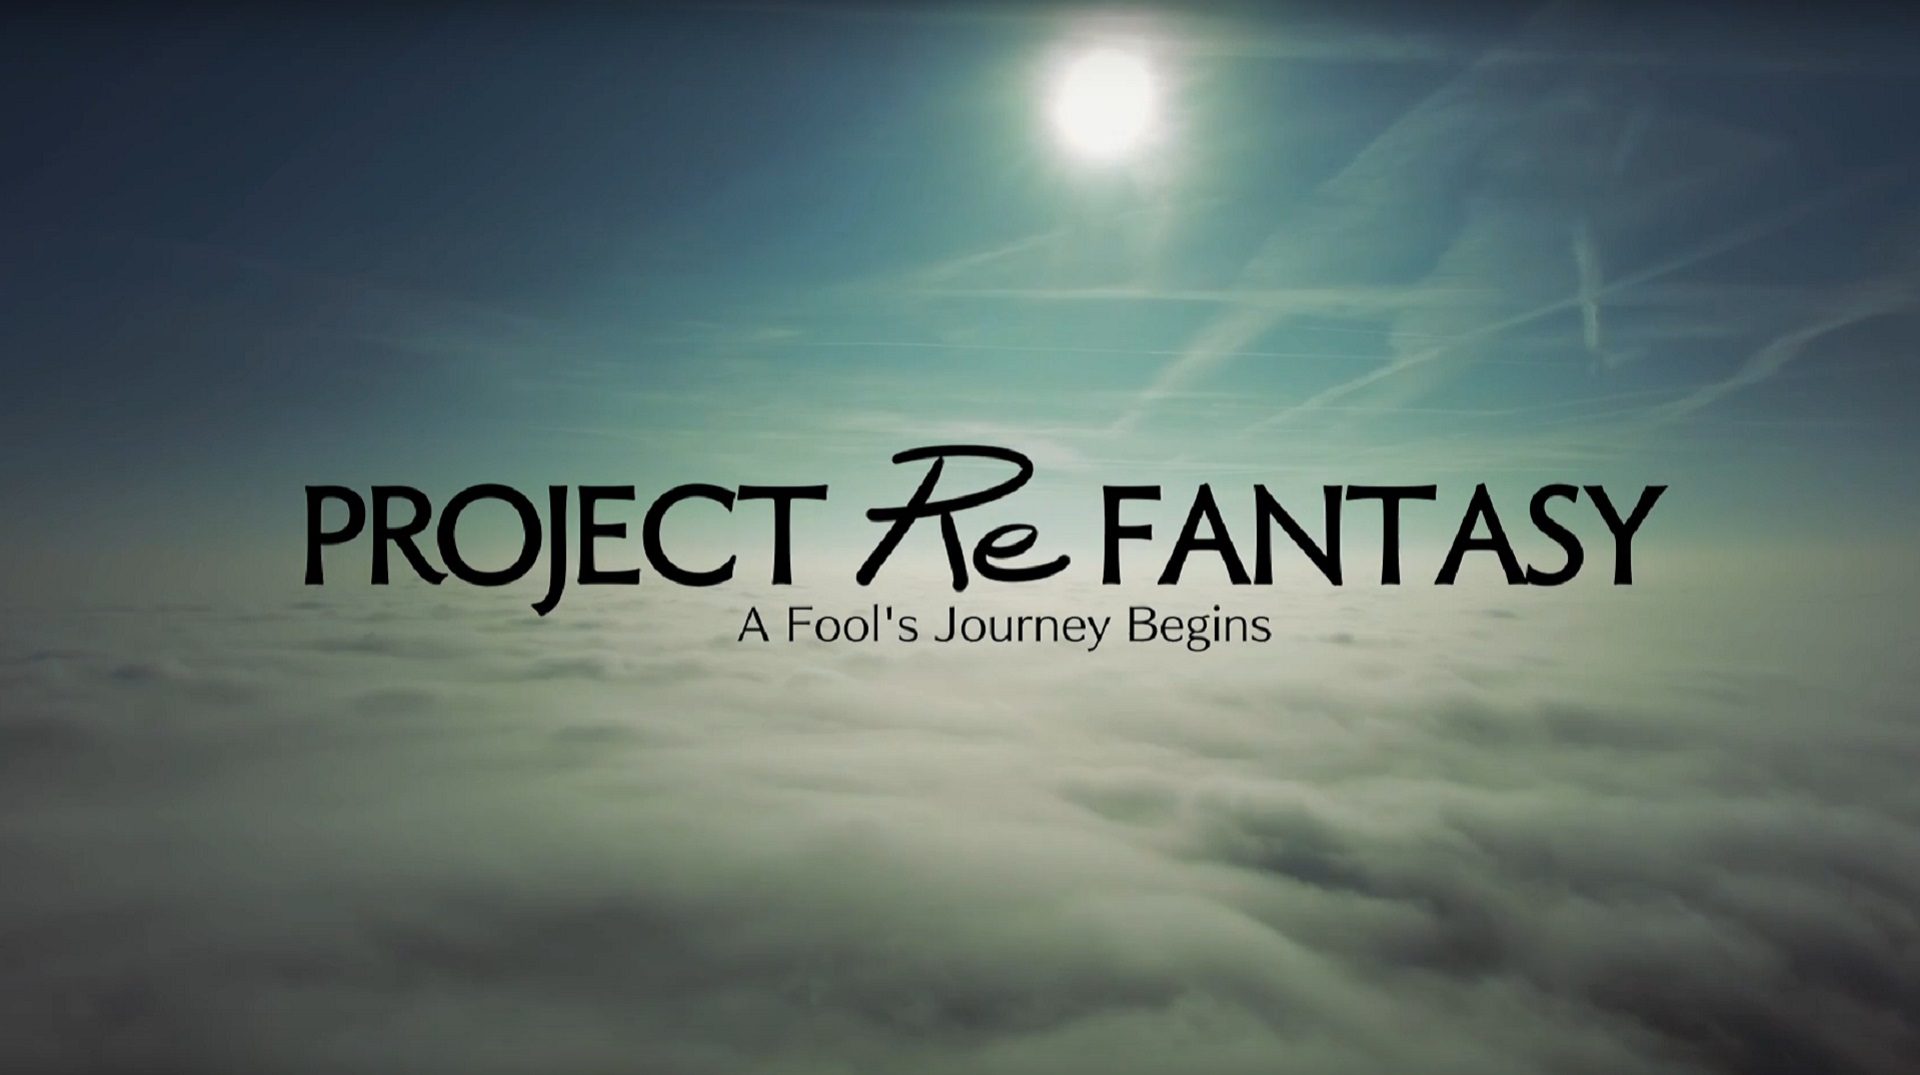 Project_Re_Fantasy_Thumb